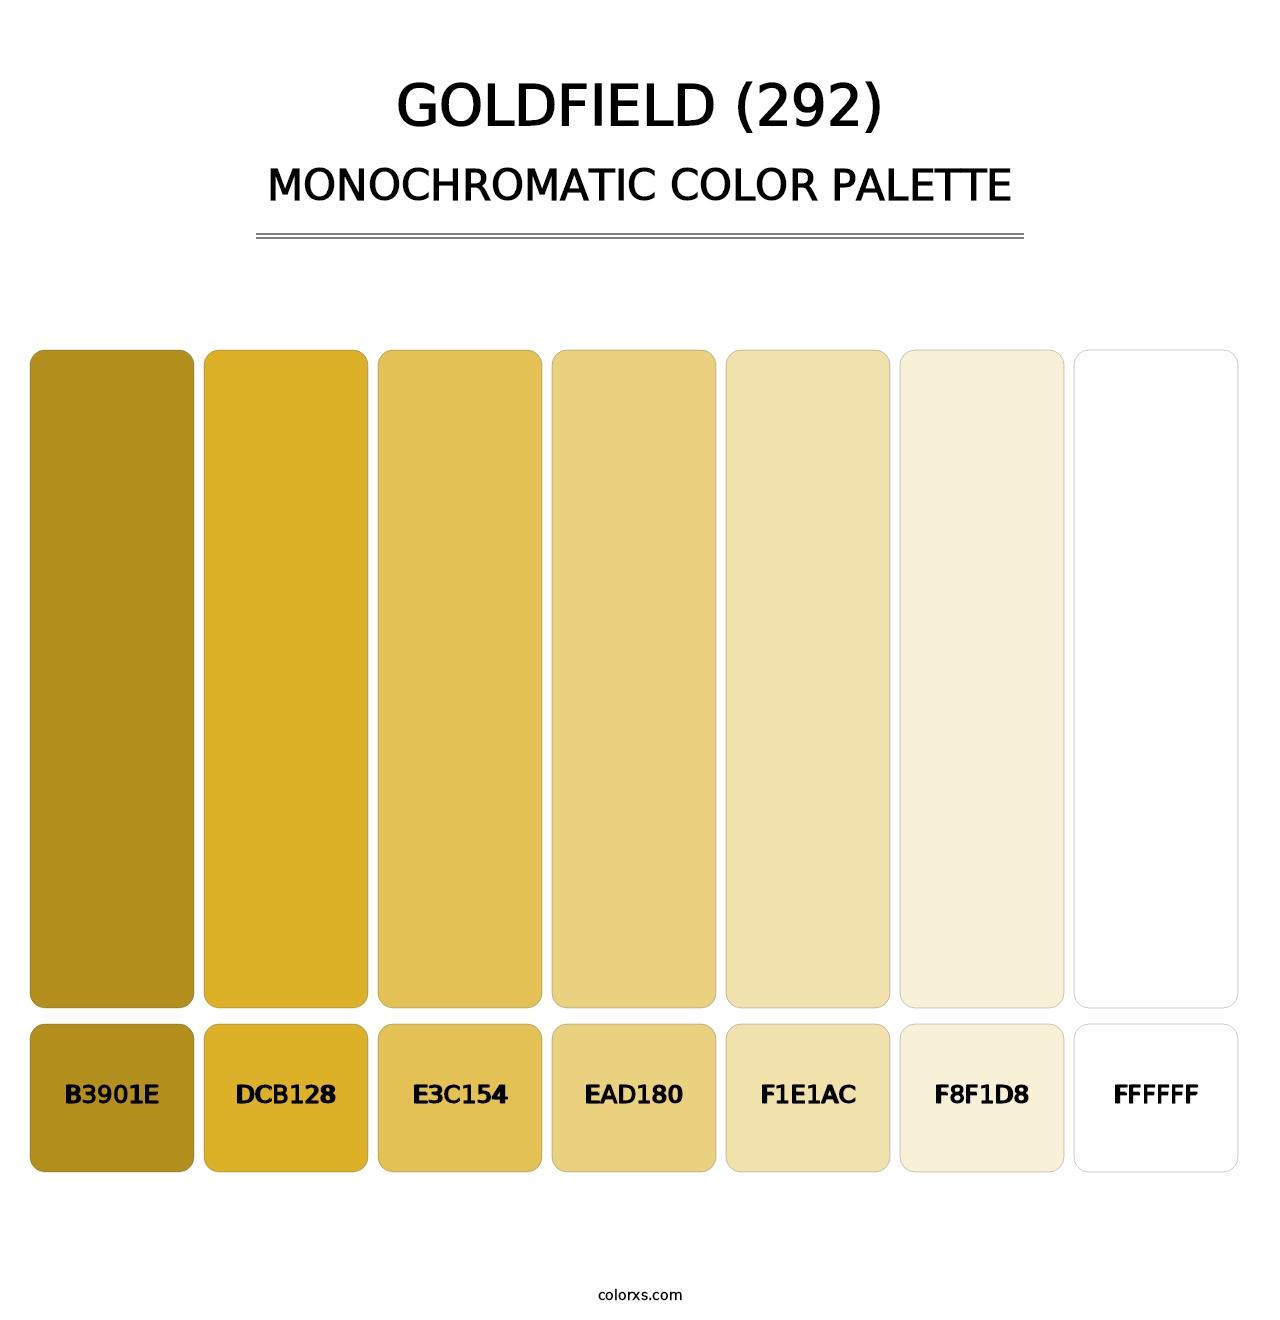 Goldfield (292) - Monochromatic Color Palette